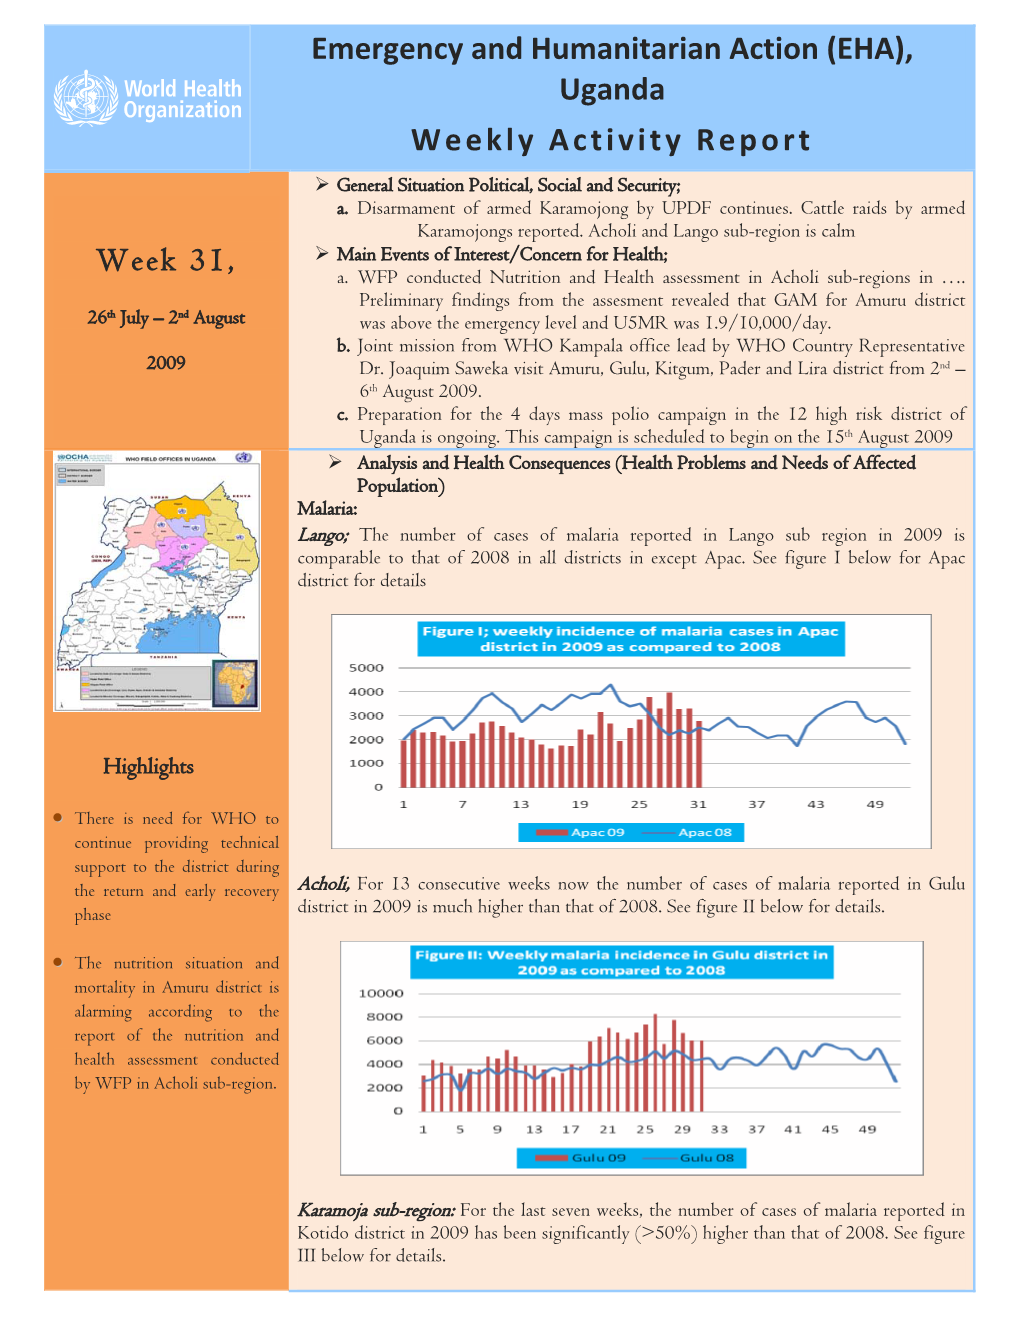 Emergency and Humanitarian Action (EHA), Uganda Weekly Activity Report Week